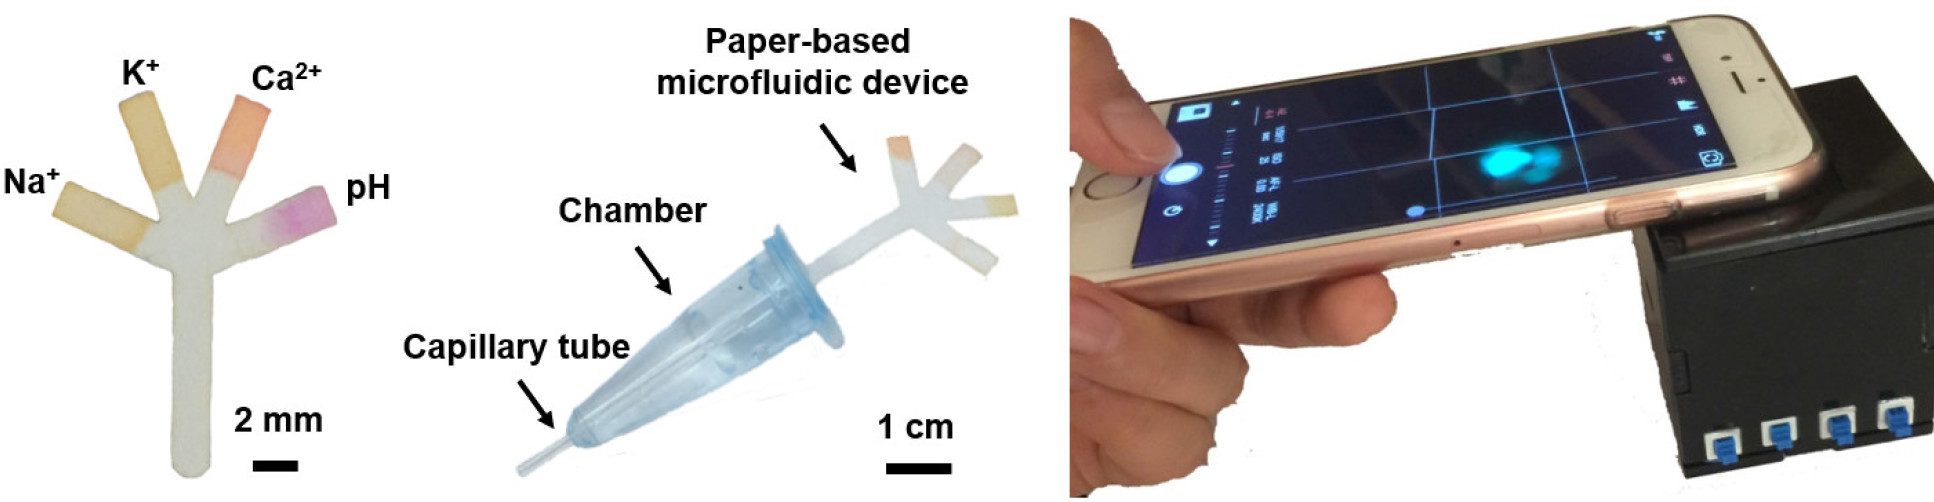 Paper-based microfluidic sensor